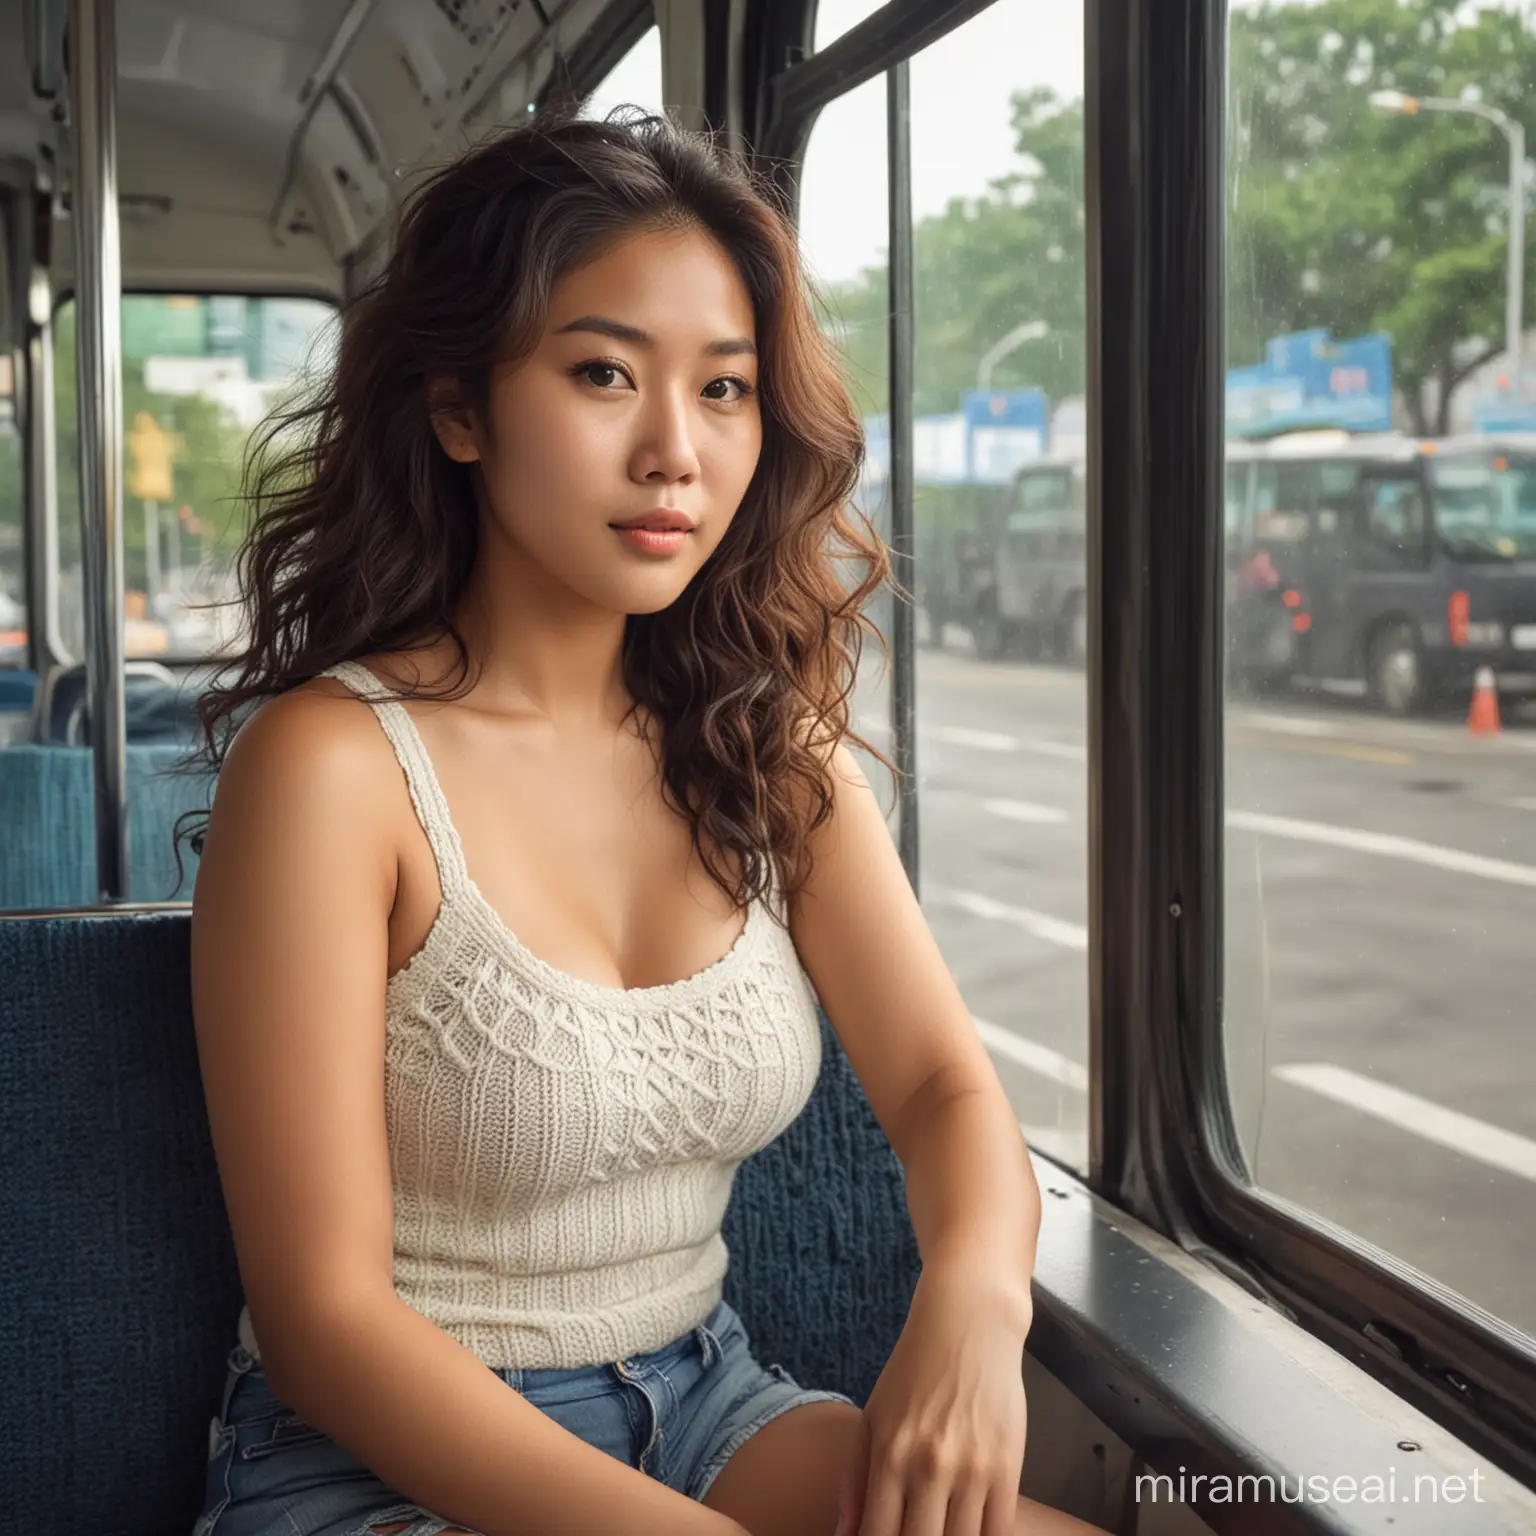 
a beautiful asian woman, wavy hair, big body, knit tank top, shorts, sitting, in the bus, morning